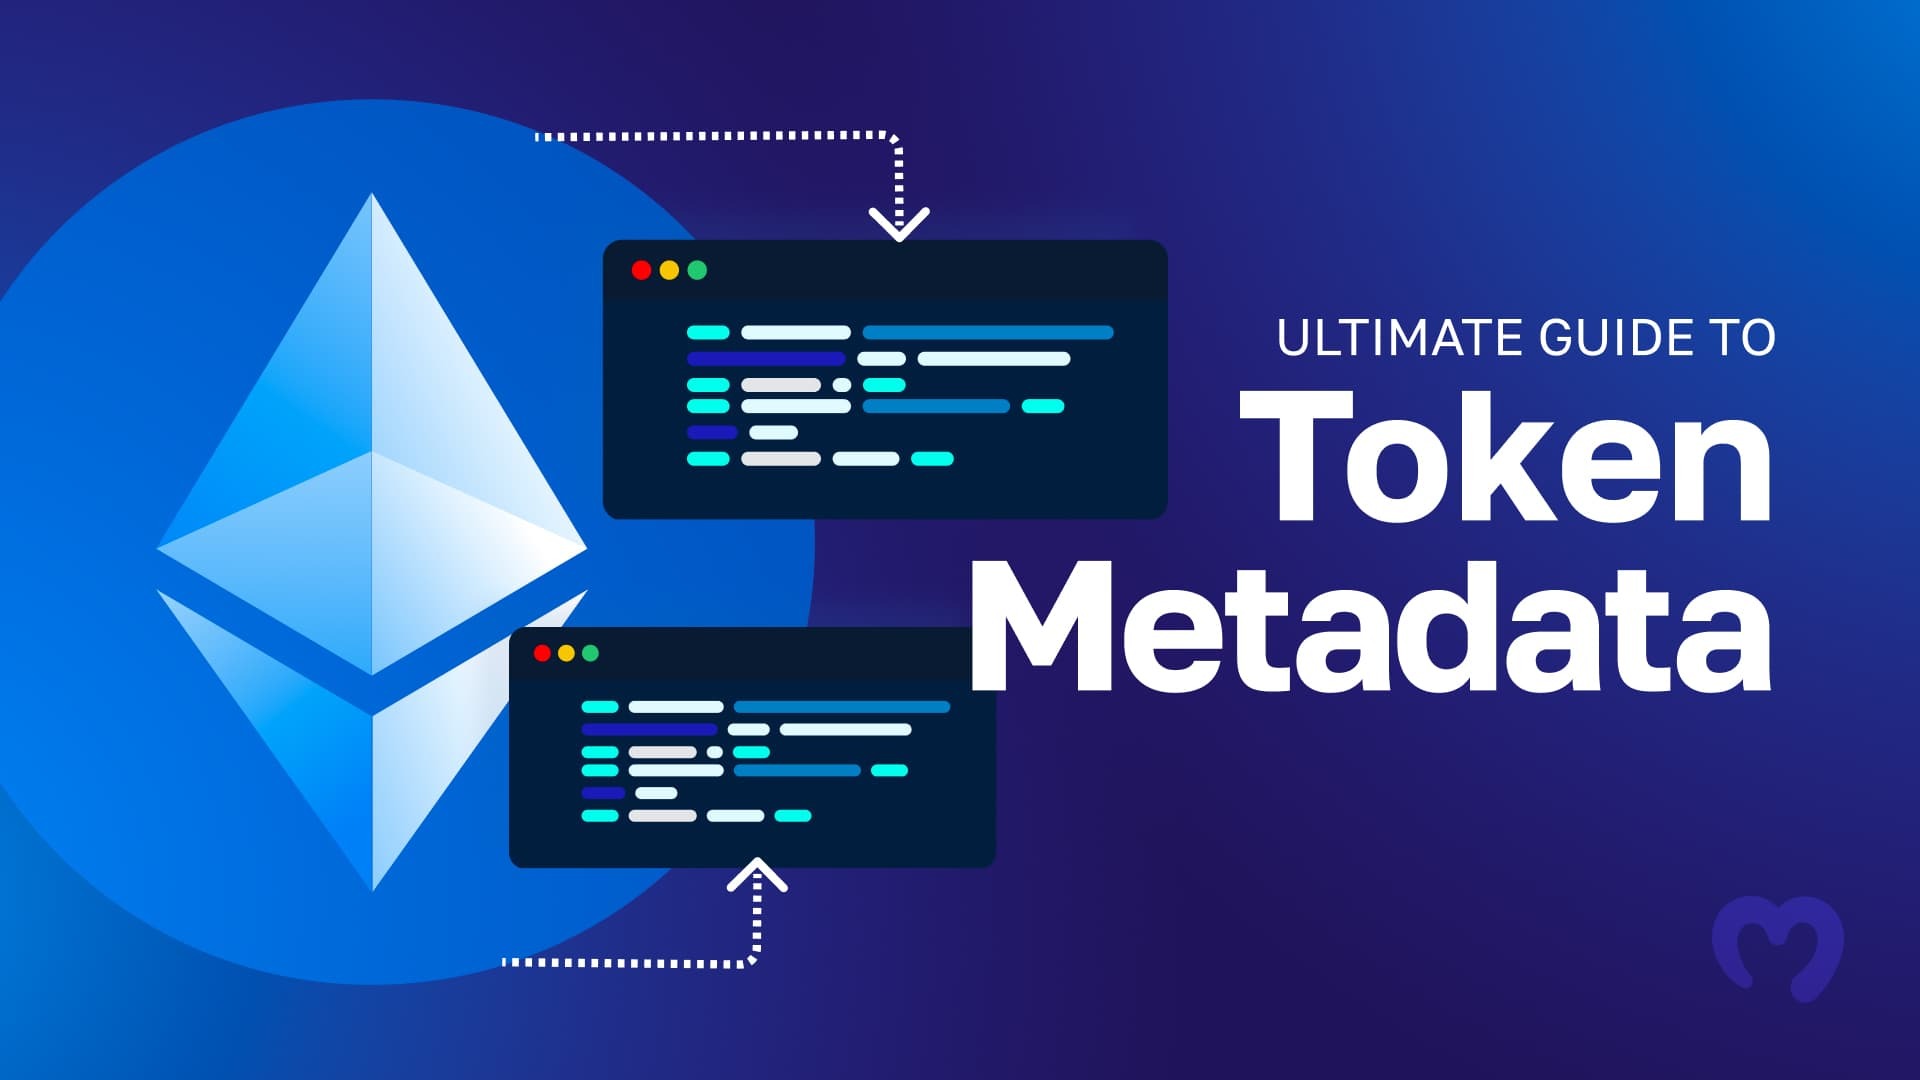 Exploring the ultimate guide to token metadata